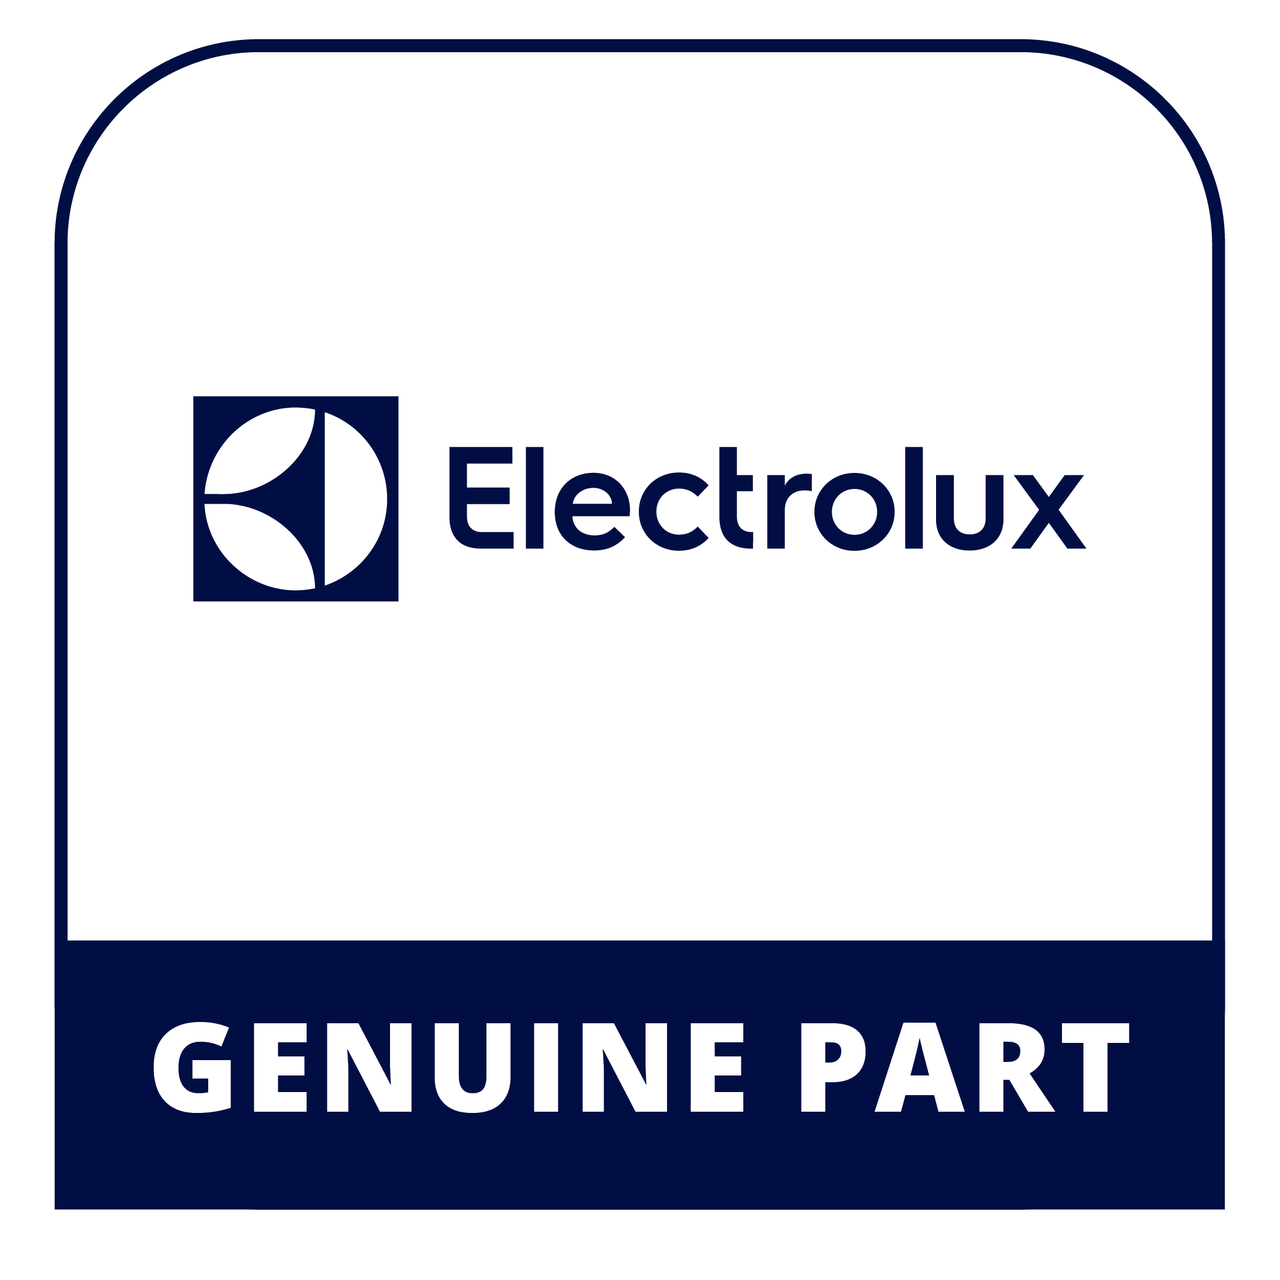 Frigidaire - Electrolux 316605900 Trim - Genuine Electrolux Part